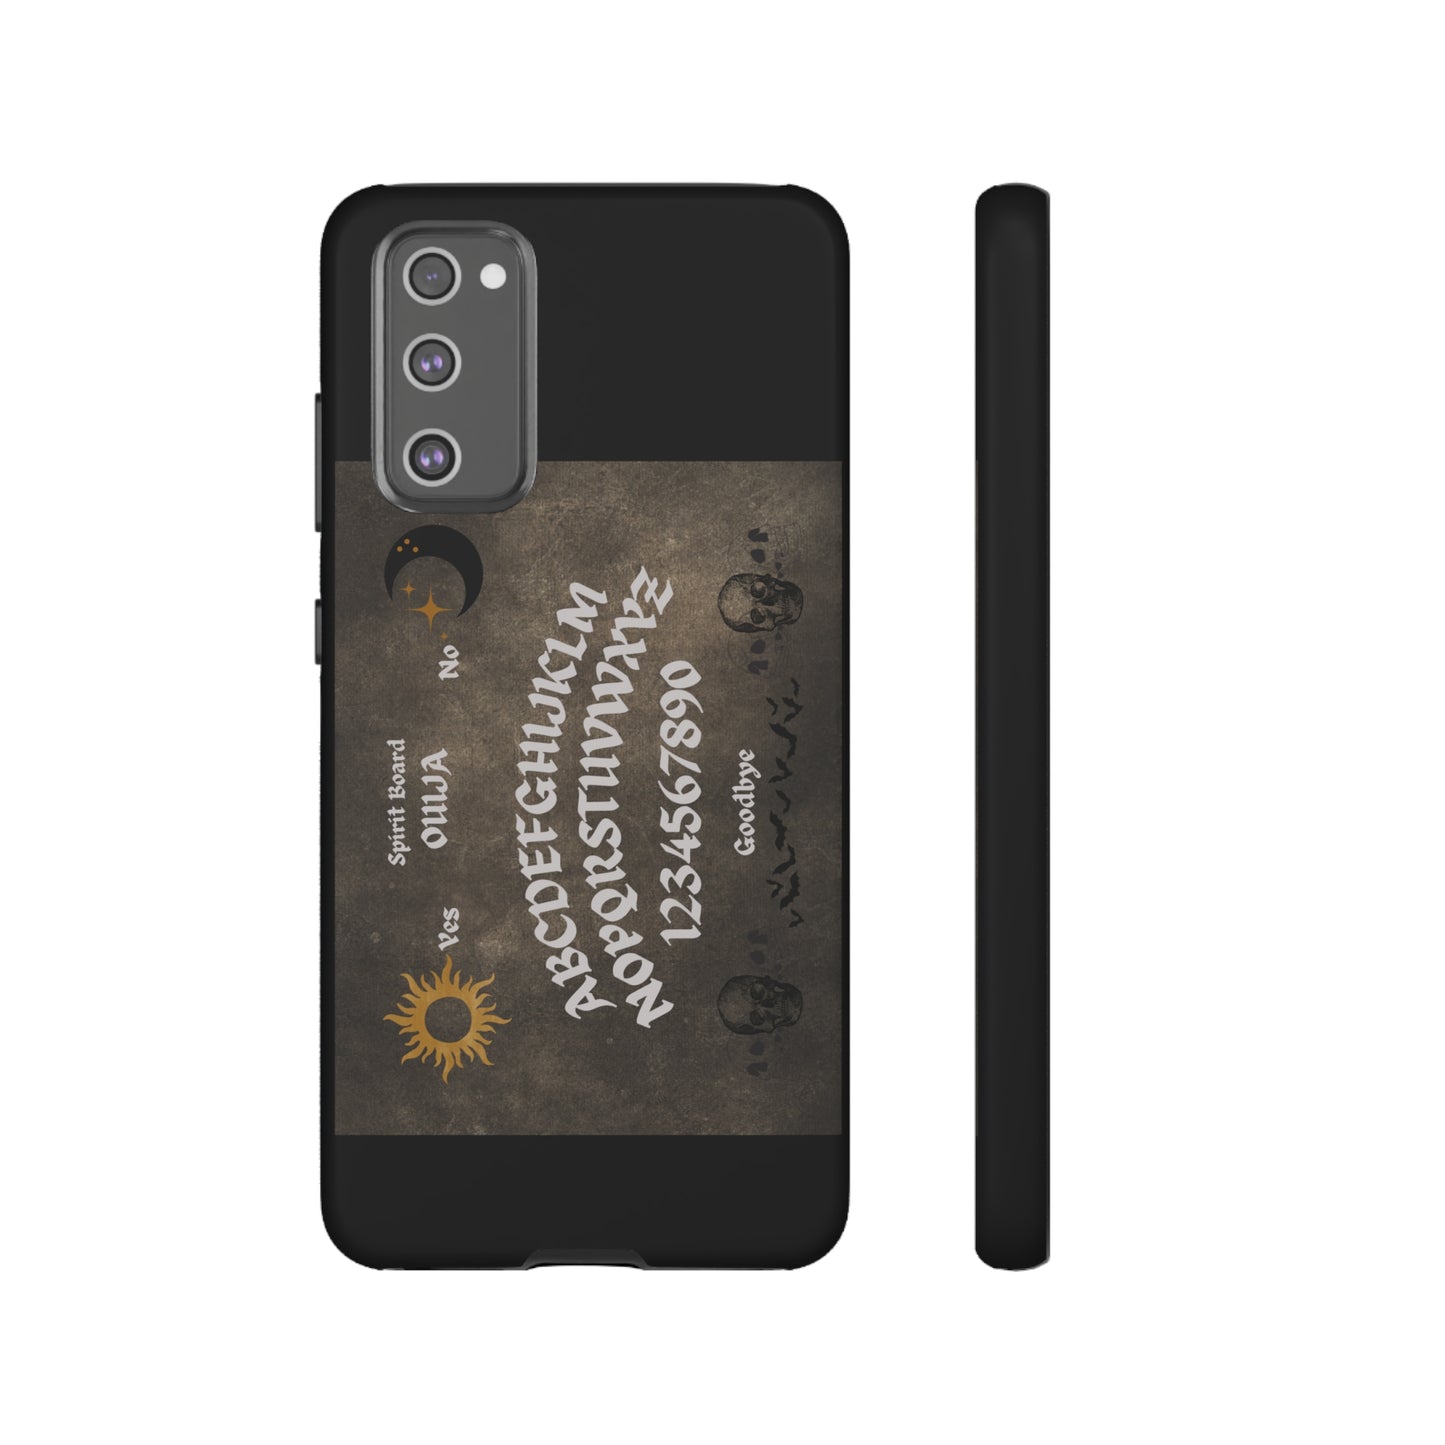 Spirit Ouija Board Tough Case for Samsung iPhone GooglePhone CaseVTZdesignsSamsung Galaxy S20 FEMatteAccessoriesboardGlossy